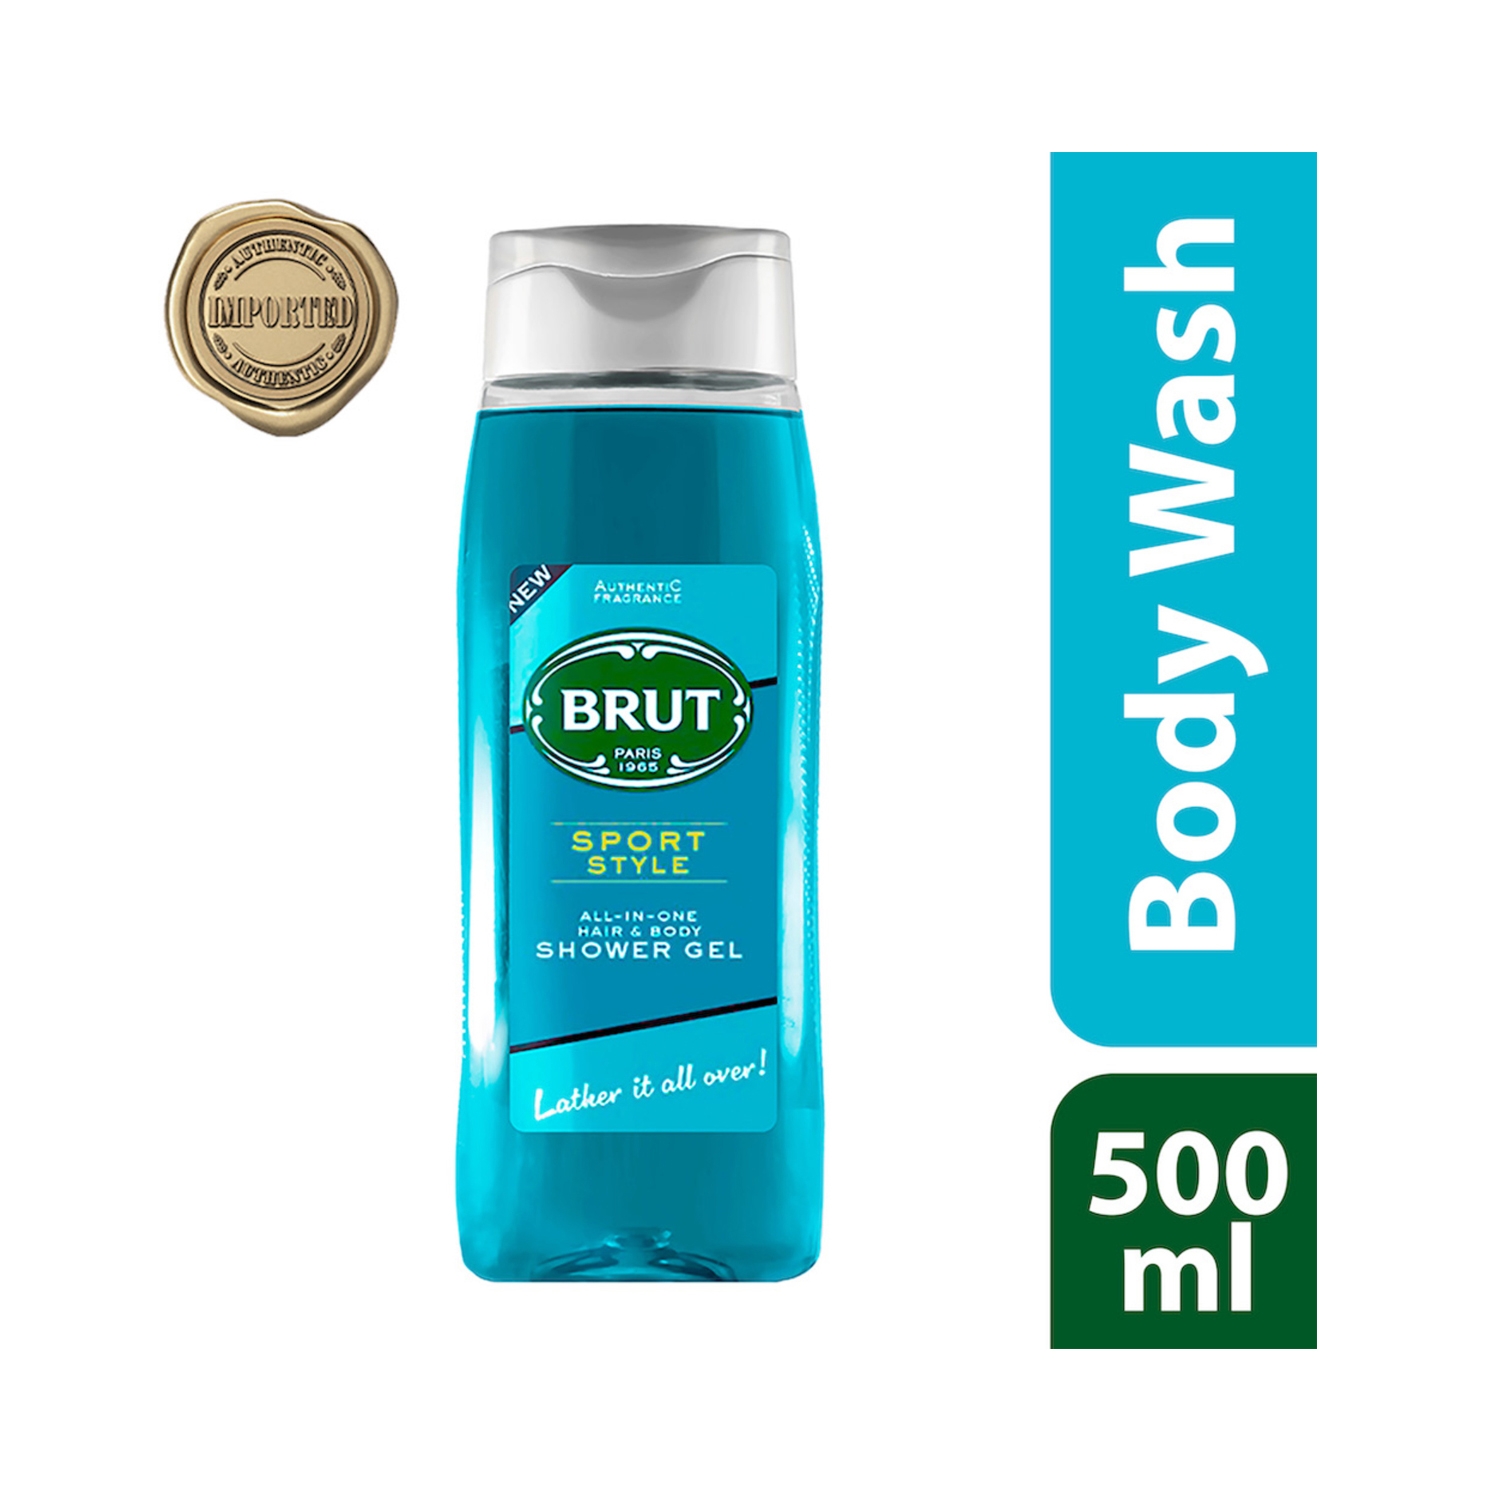 Brut | Brut Sport Style All-In-One Hair & Body Shower Gel (500ml)